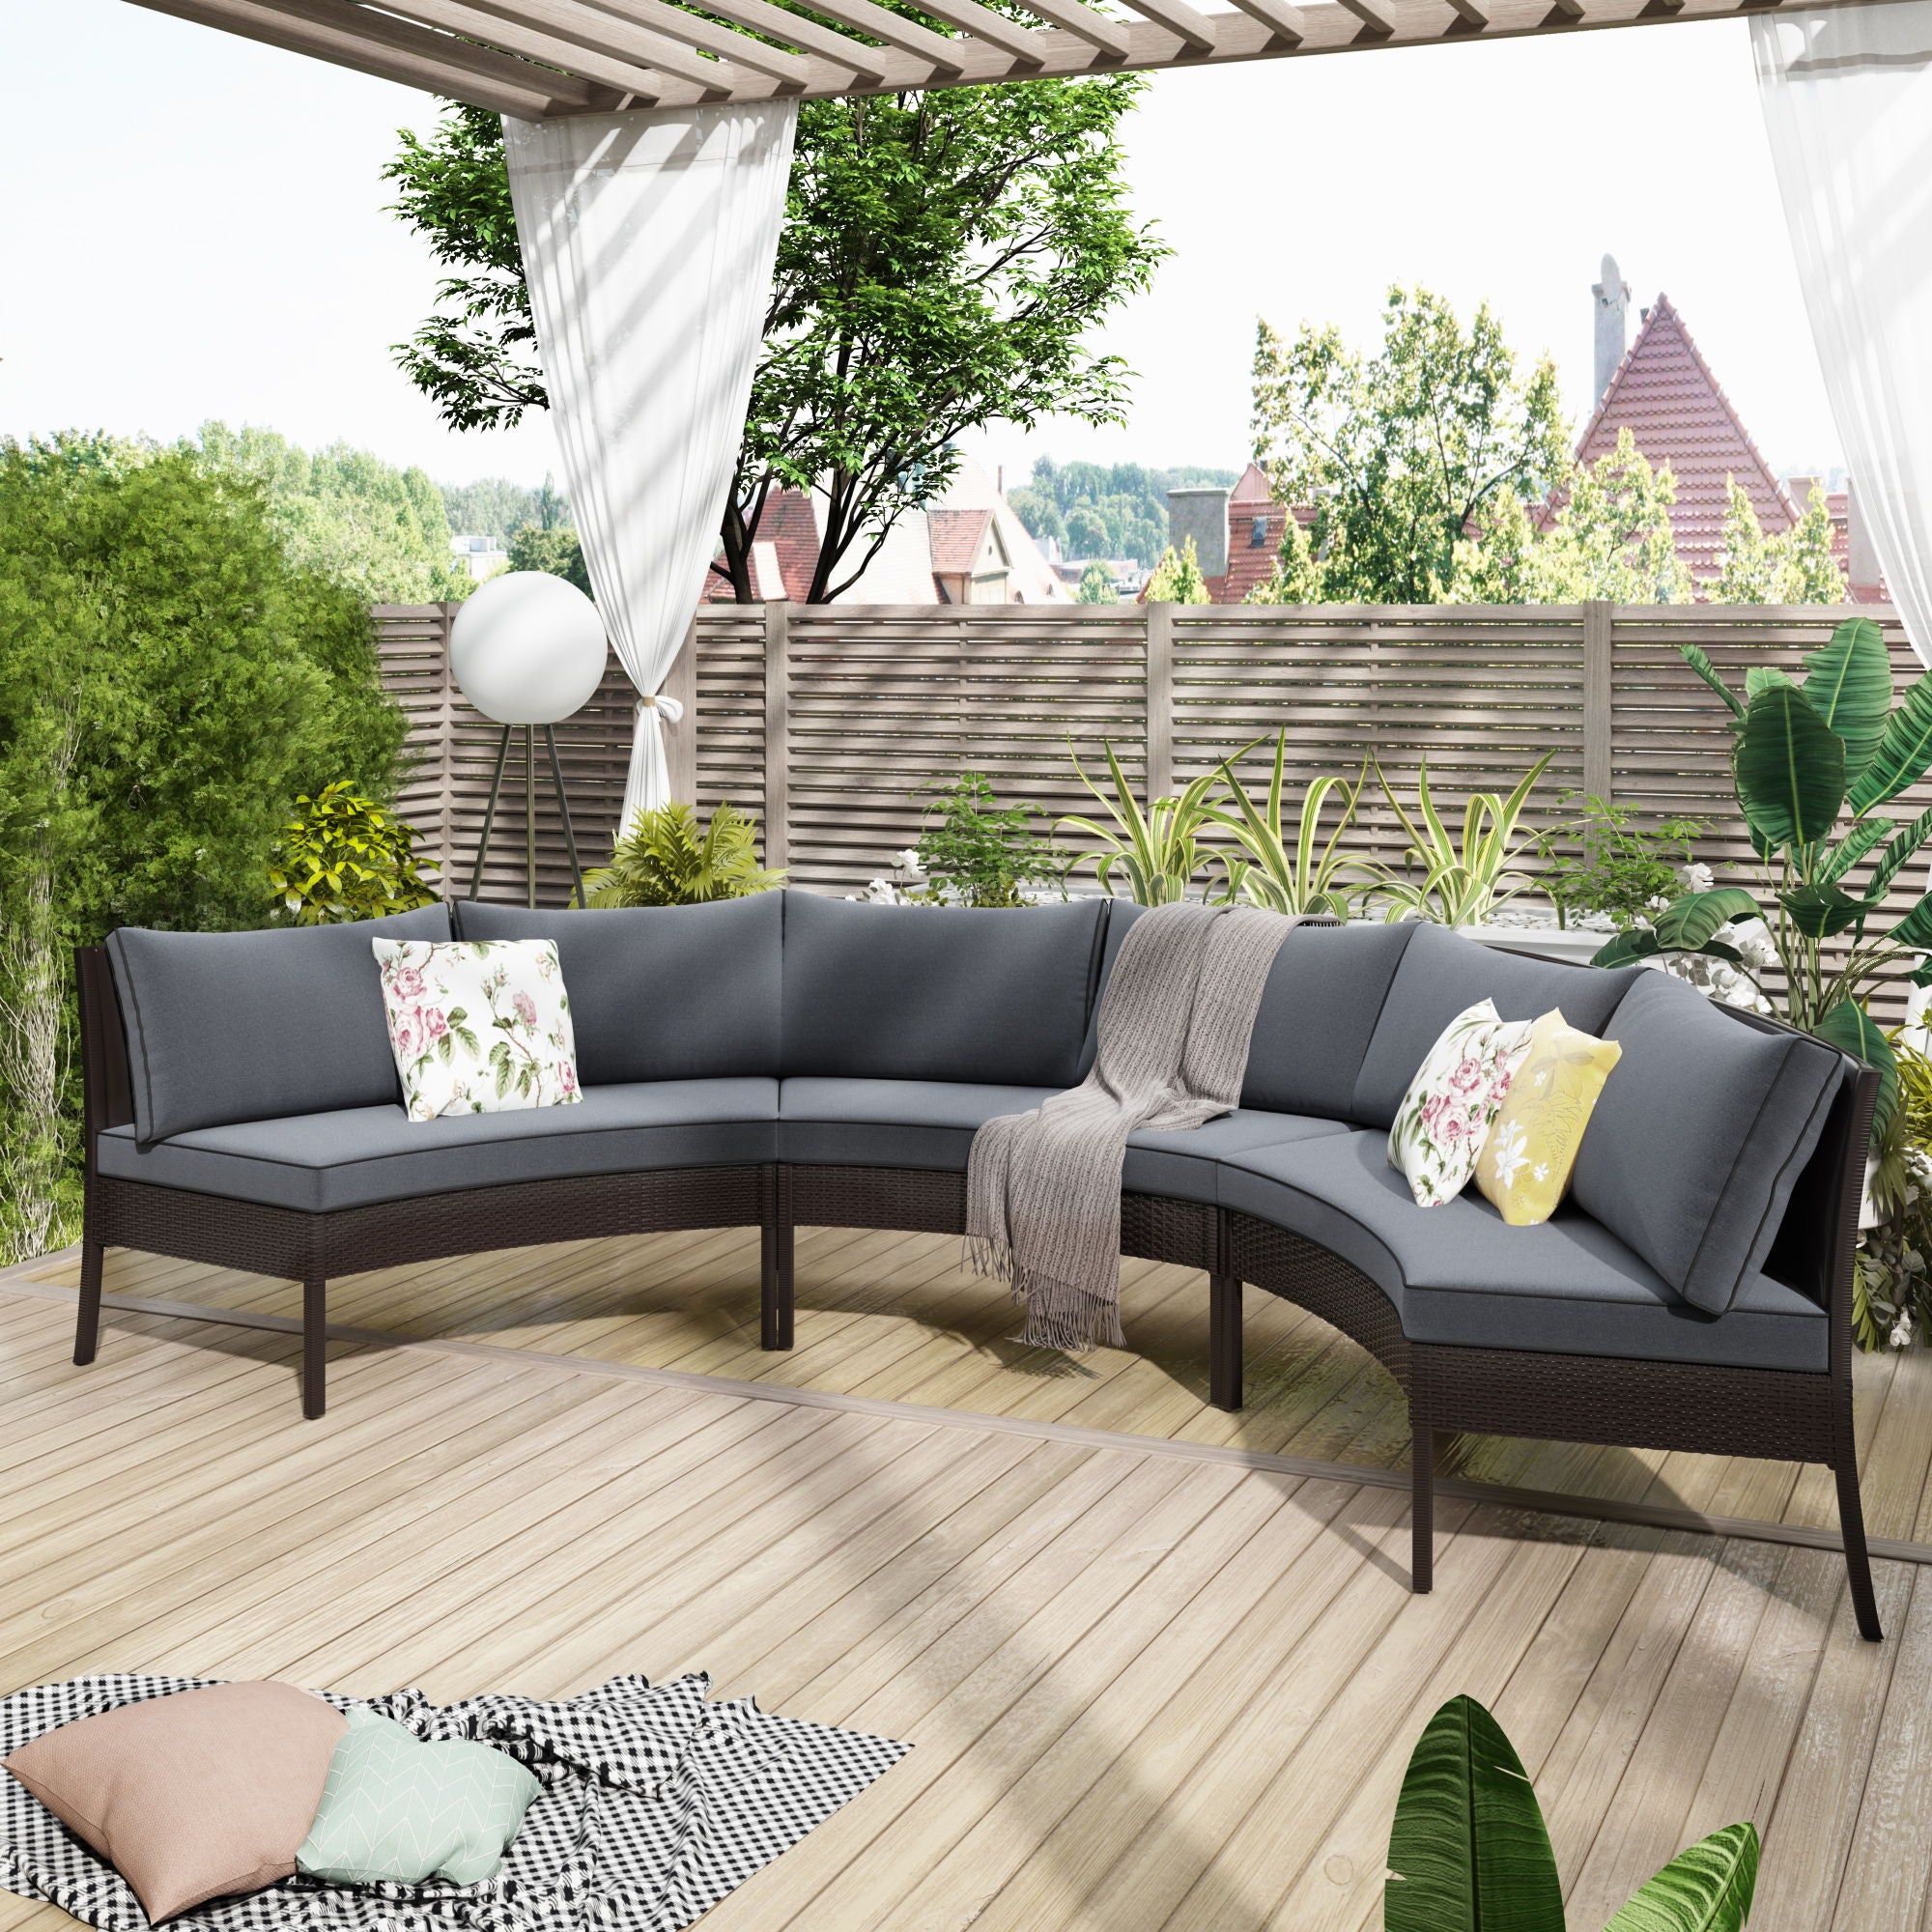 U_Style-Outdoor 3 Piece Sectional Furniture, Patio Half-Moon Wicker Sofa Set, Brown Pe Rattan And Grey Cushions